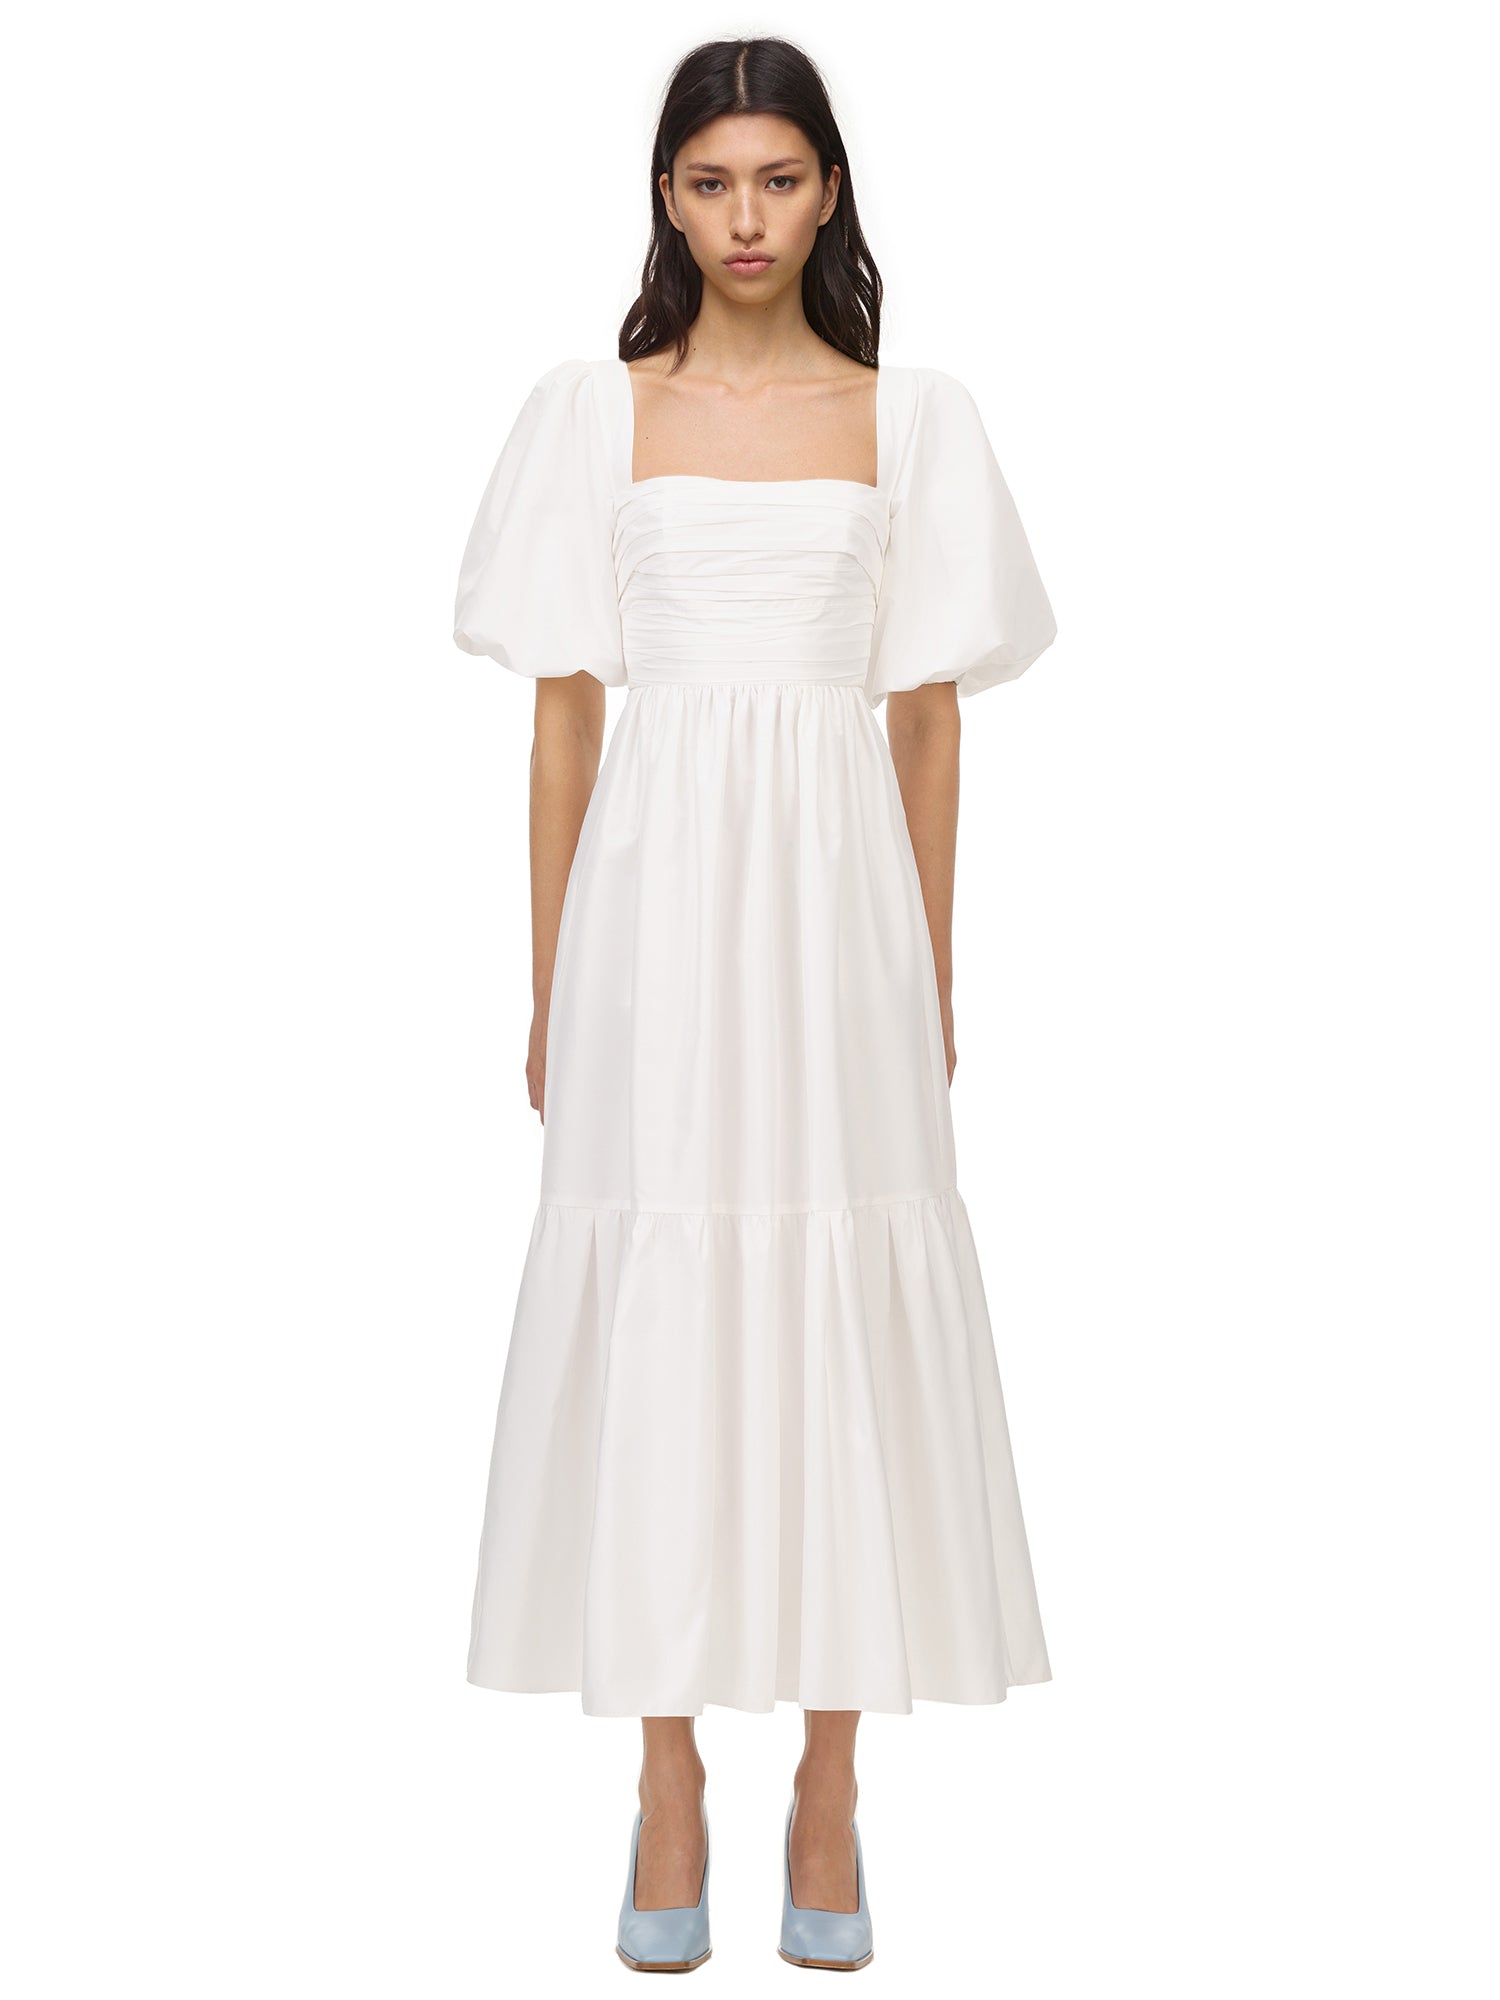 Puff Sleeve White Dress